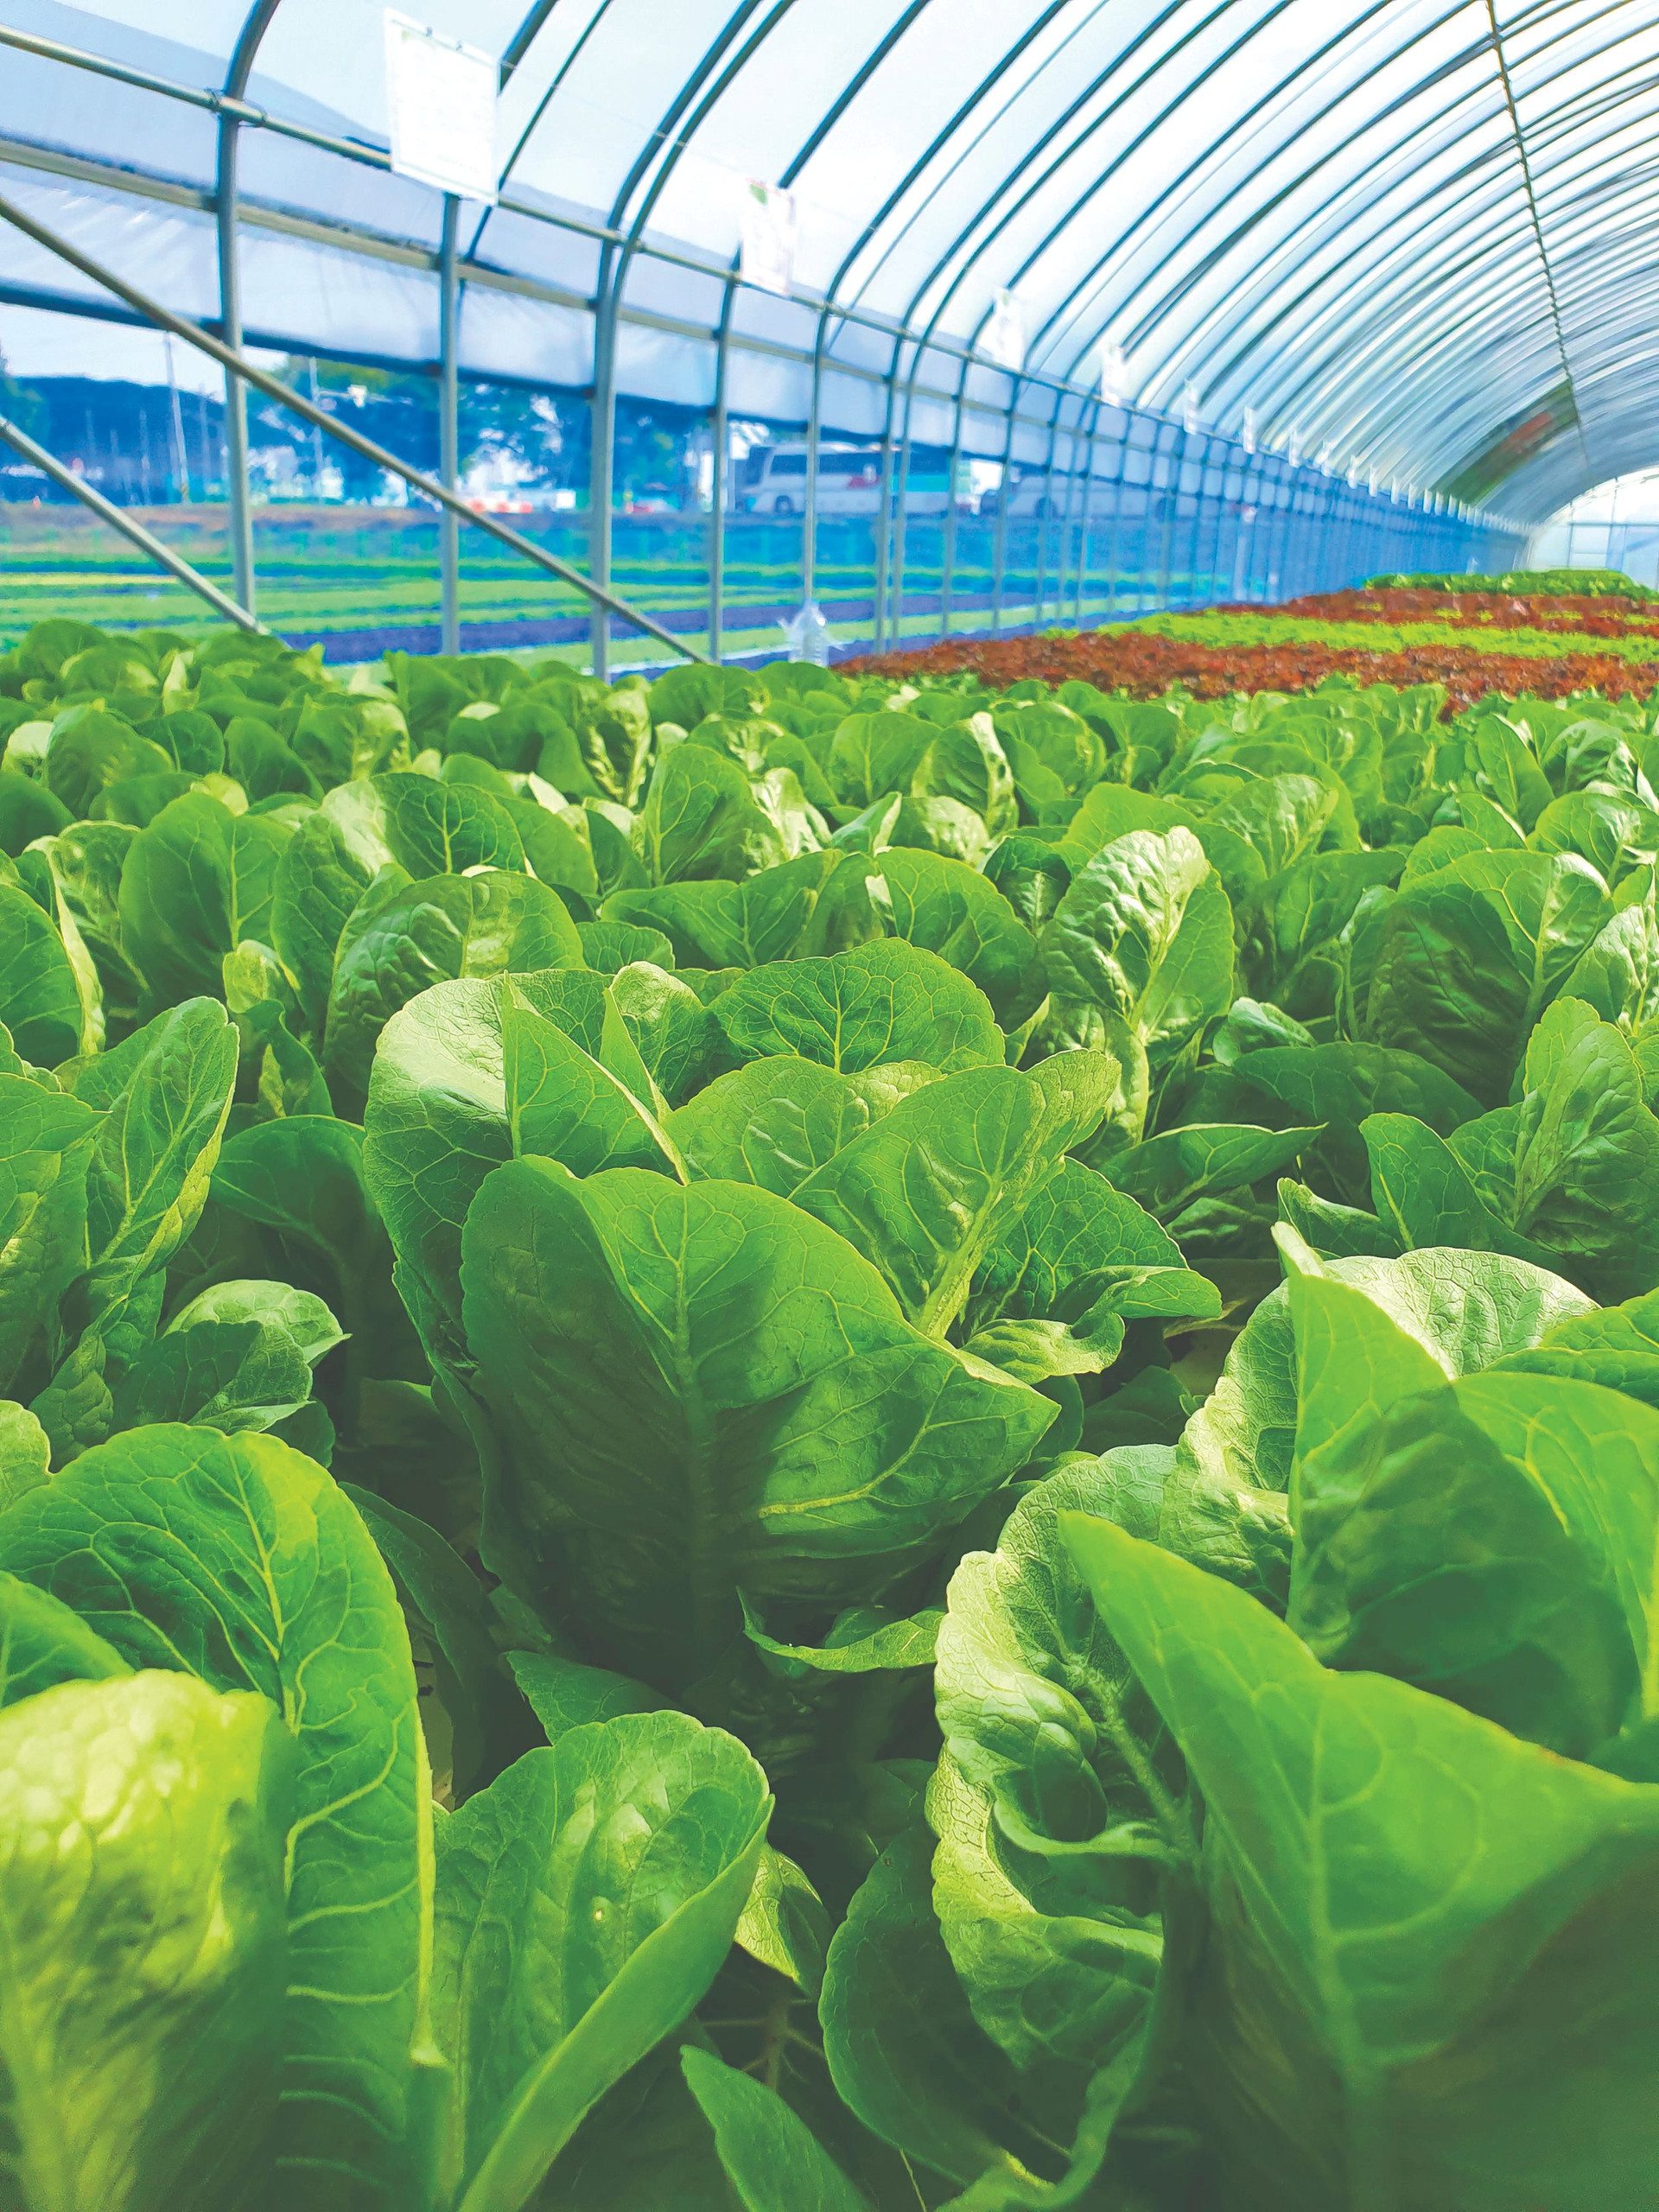 leafy-vegetables-are-growing-indoor-farm-vertical-farm-vertical-farm-compressed.jpeg